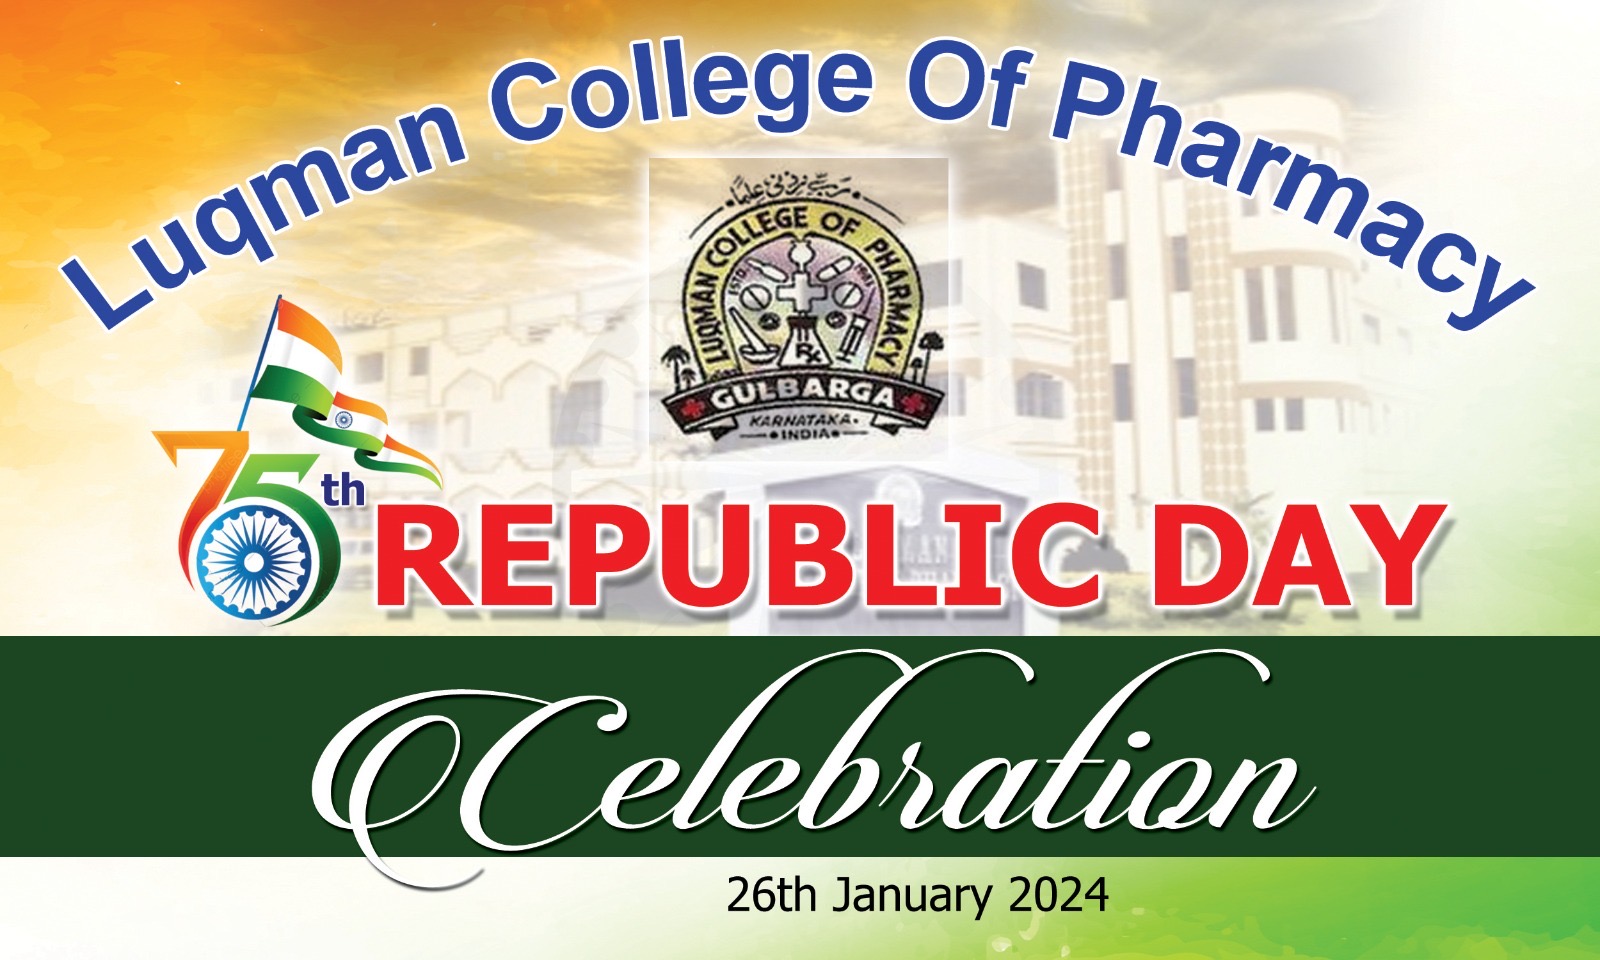 75th REPUBLIC DAY CELEBRATION